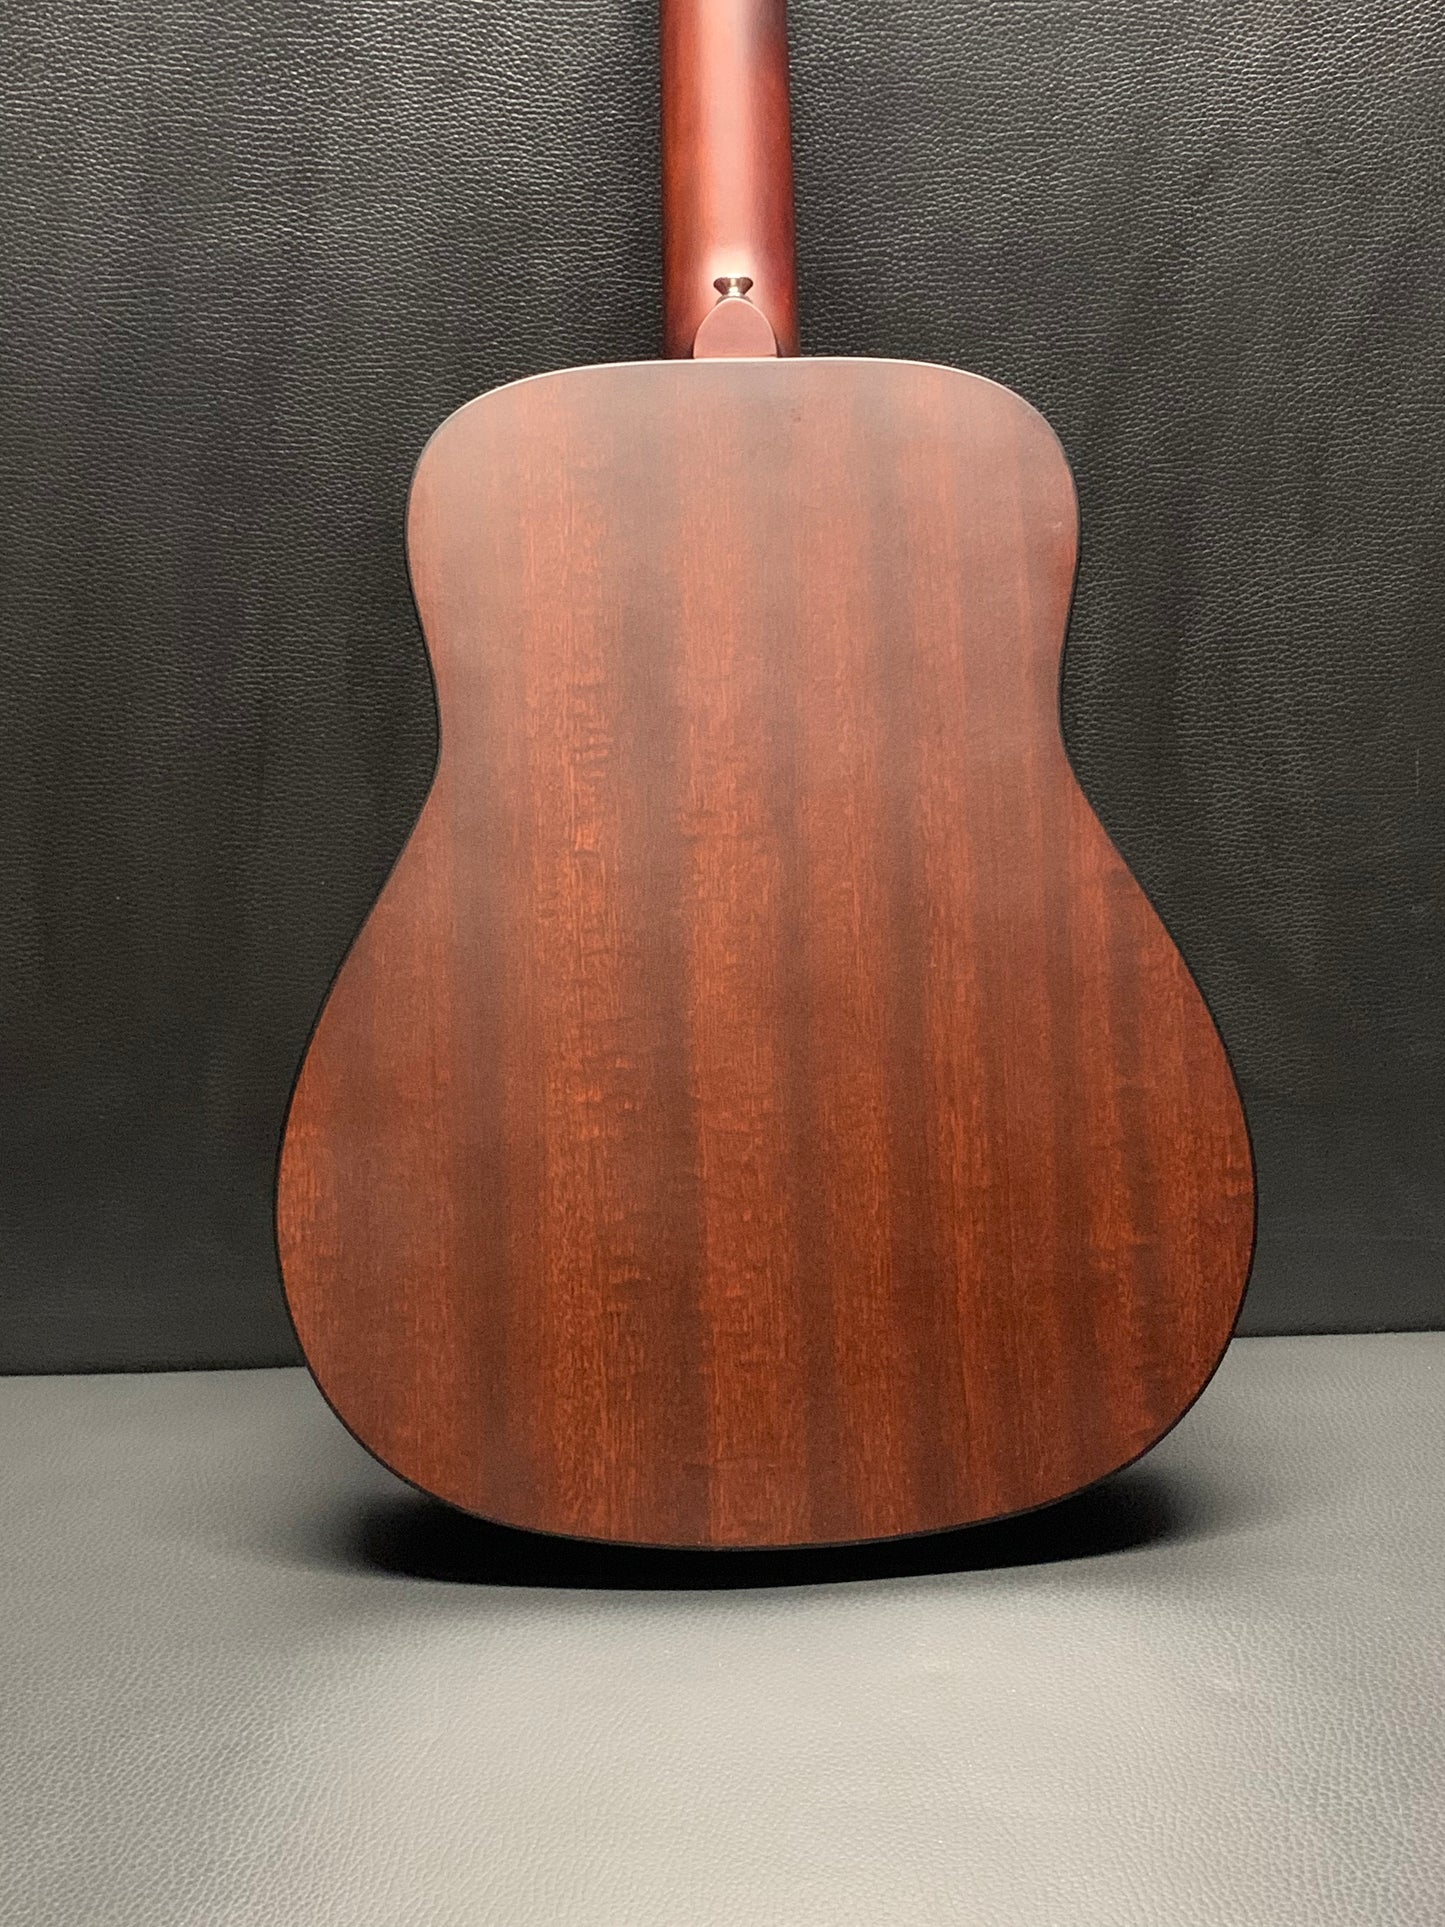 Yamaha JR2 Compact Acoustic Guitar